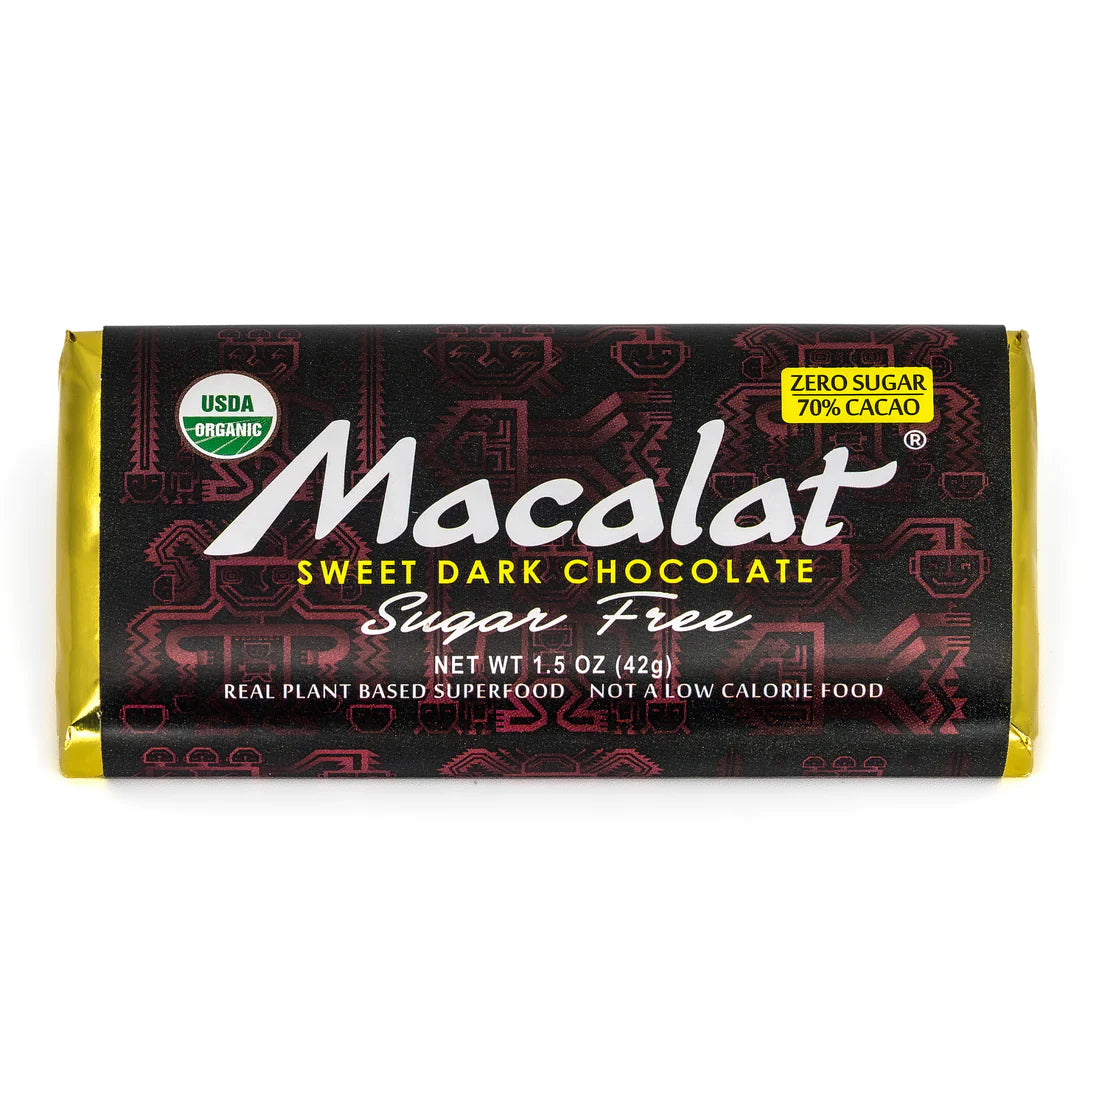 Macalat Sample Pack of 4